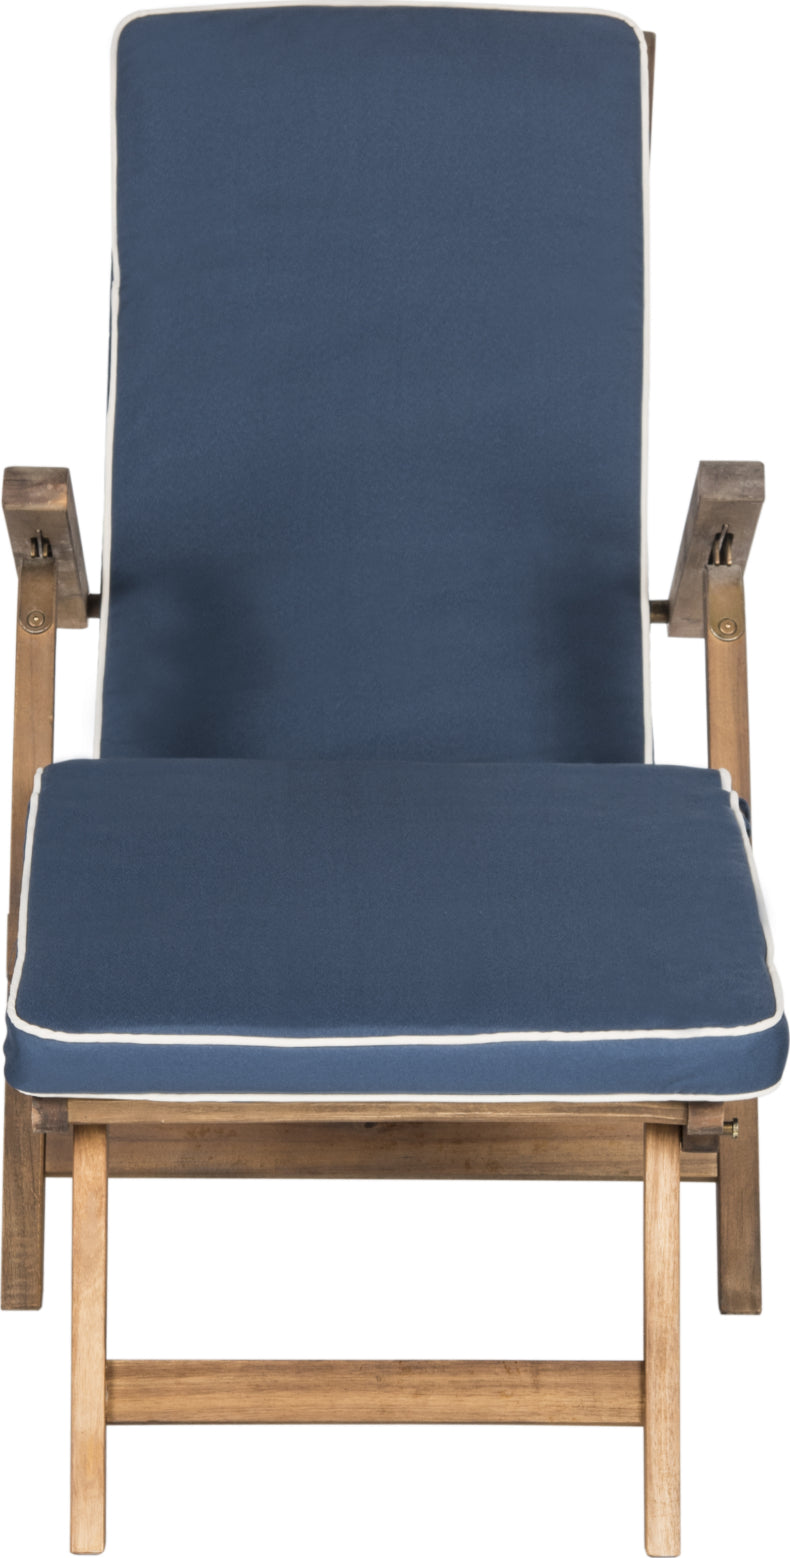 Safavieh Palmdale Lounge Chair Teak Brown/Navy Furniture main image